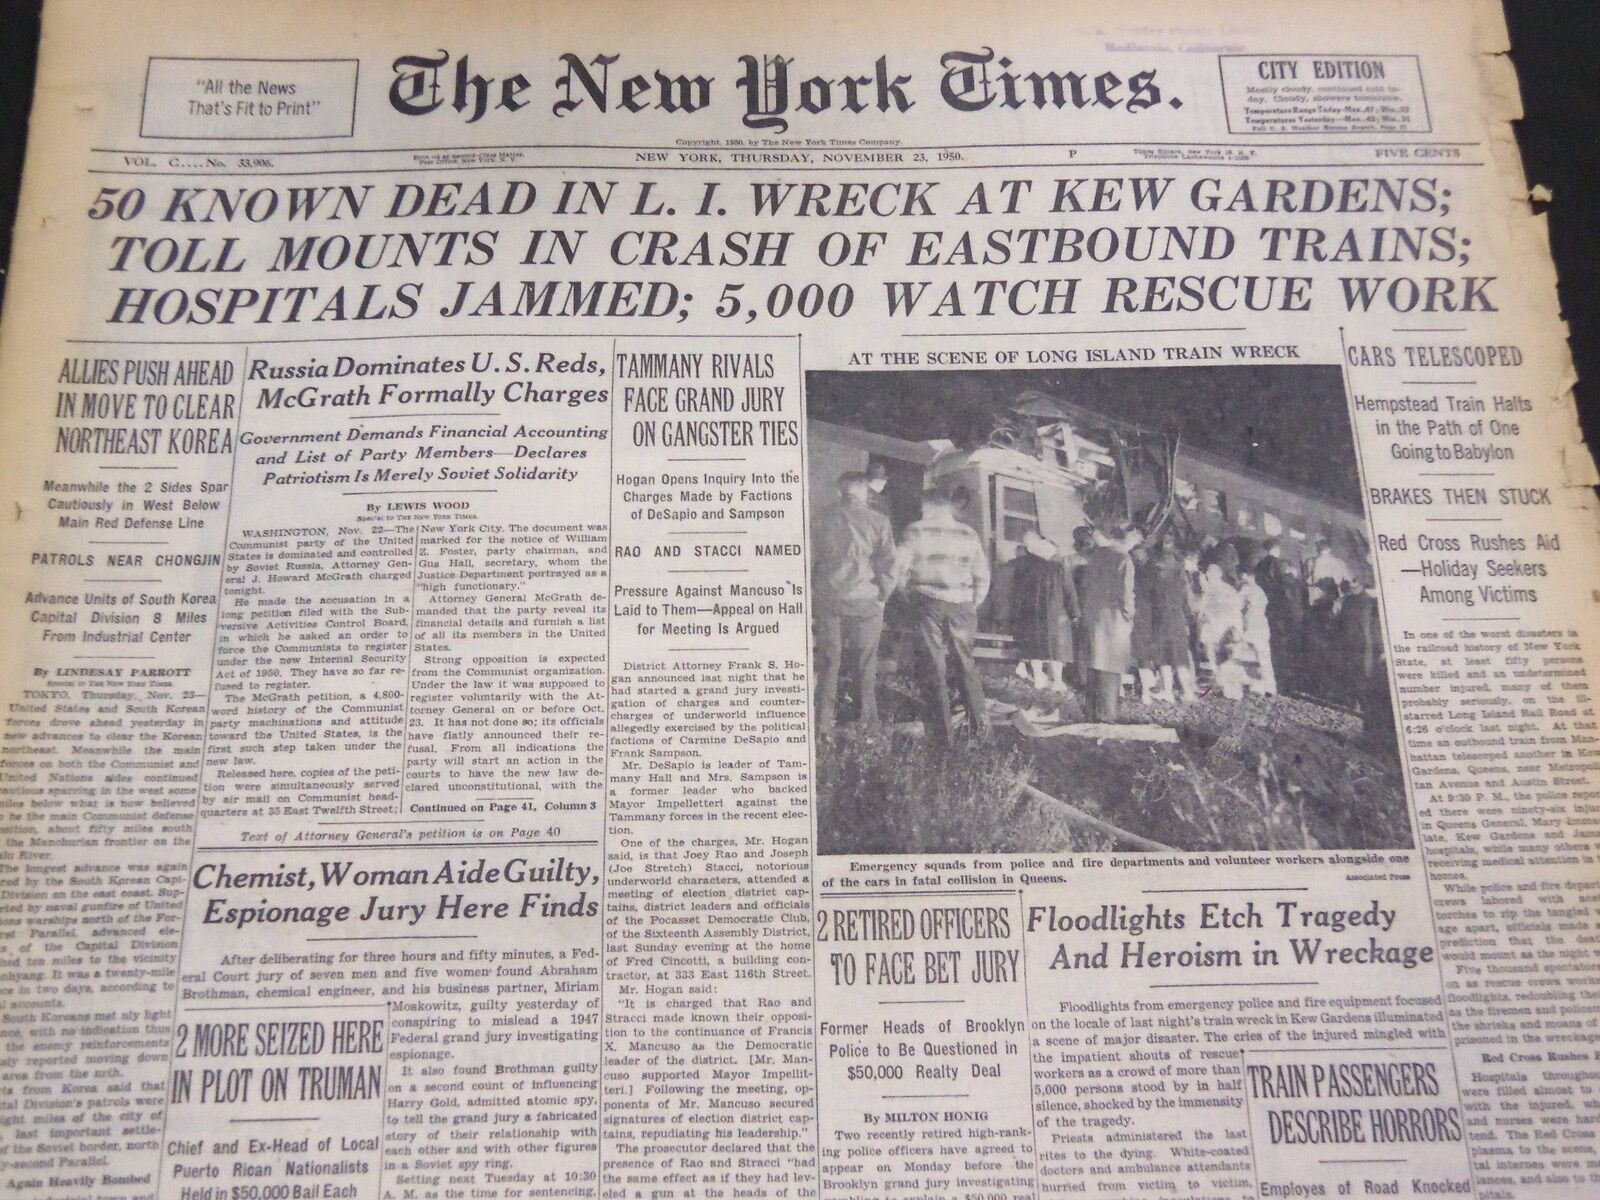 1950 NOVEMBER 23 NEW YORK TIMES - KEW GARDENS WRECK 50 DEAD - NT 4290